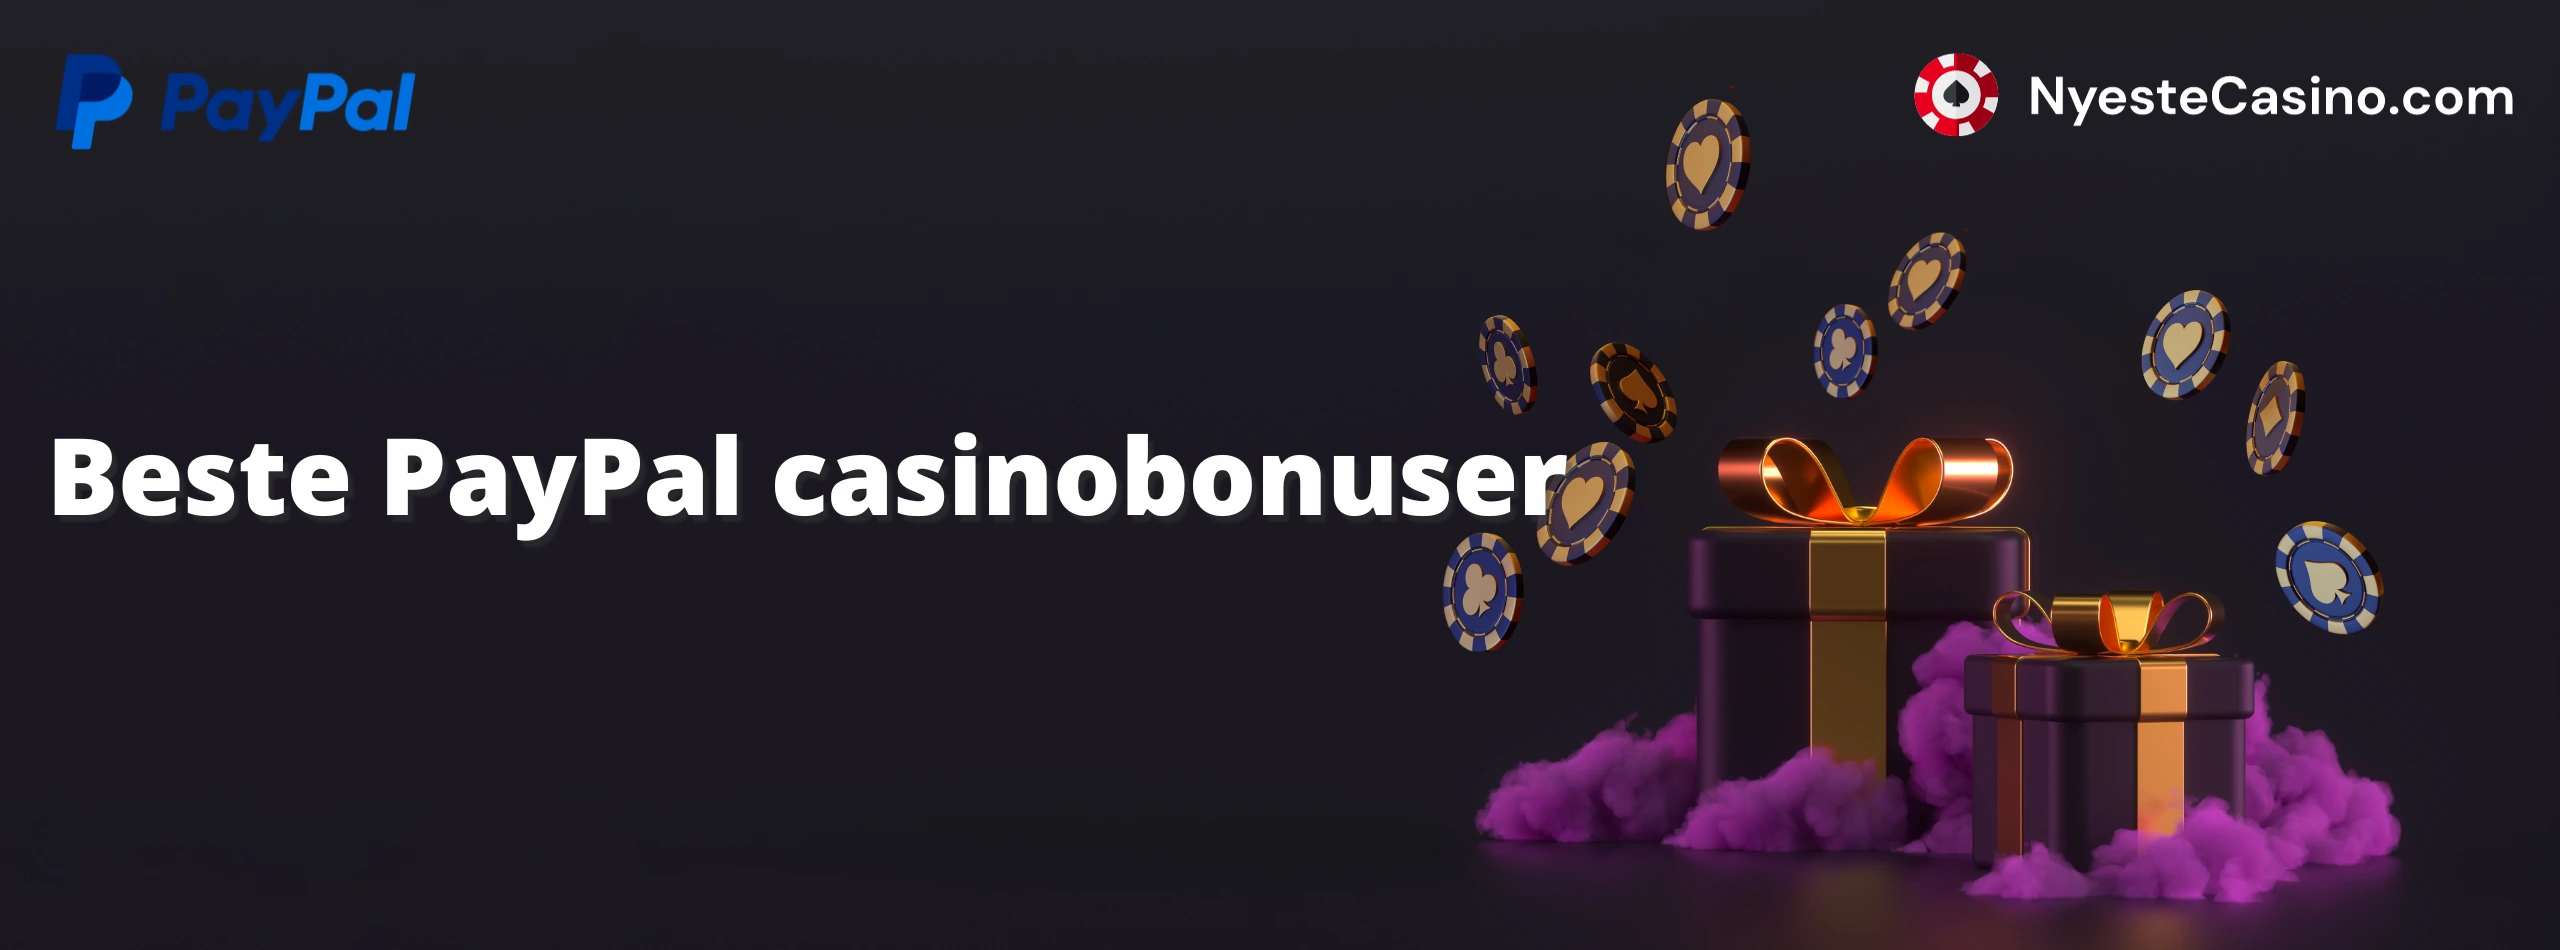 Casinobonus med PayPal Norge